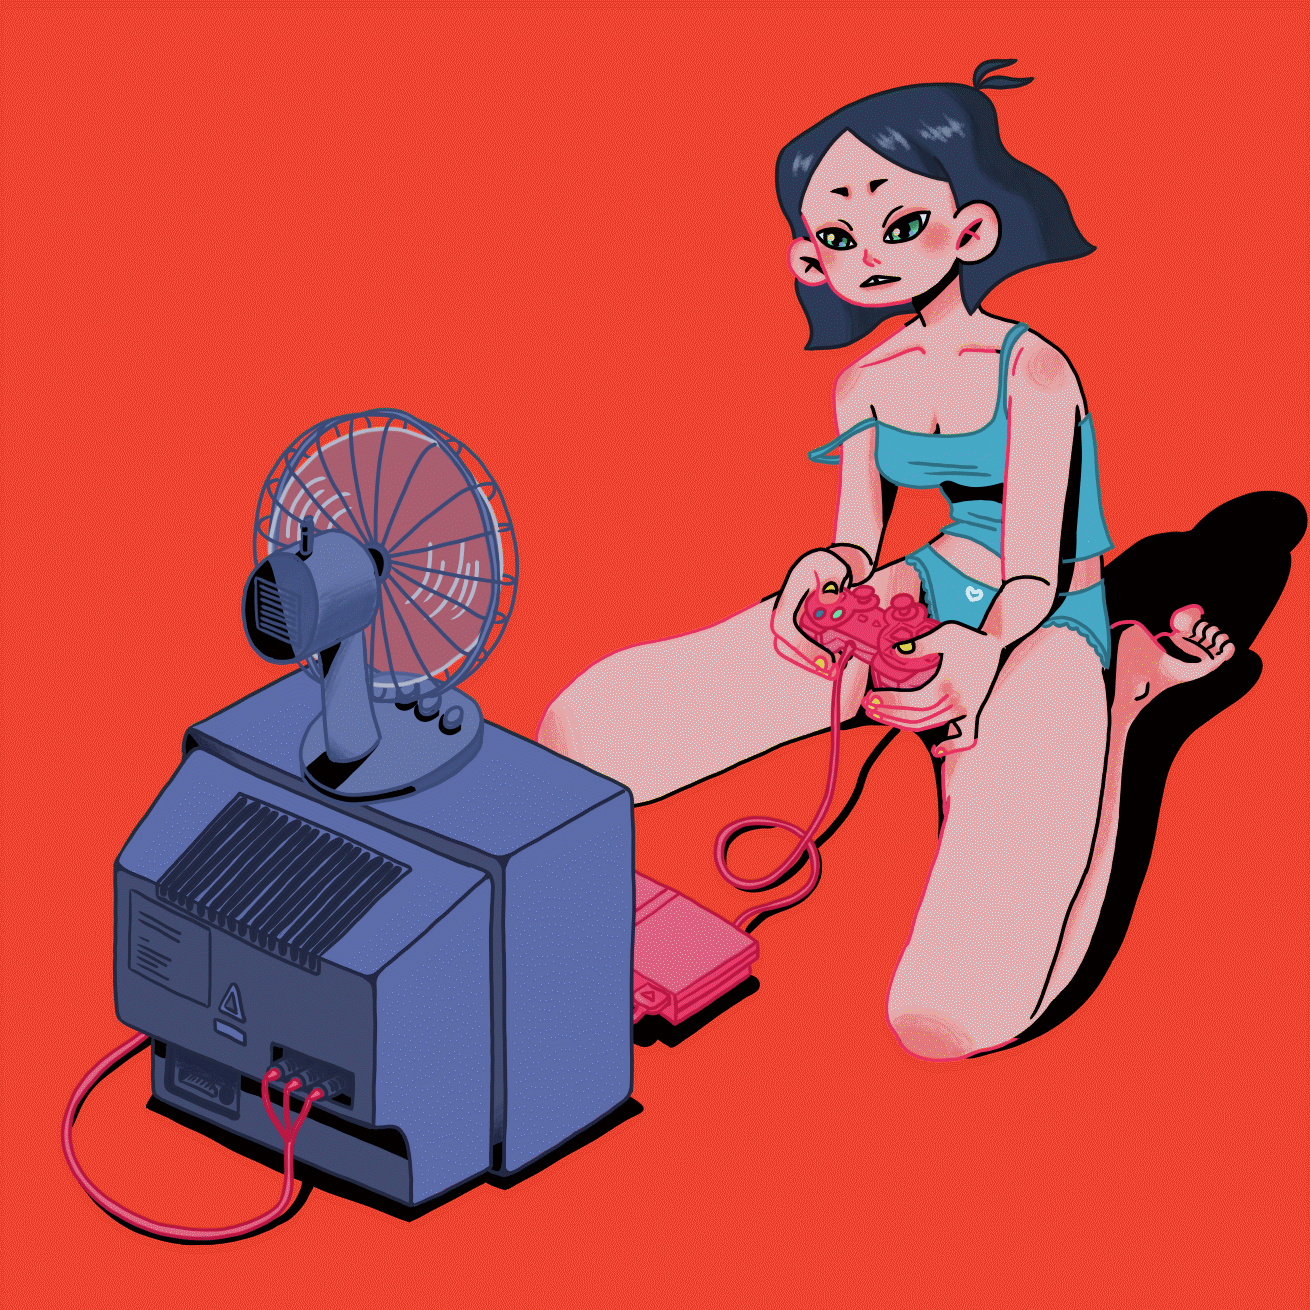 Summer heat